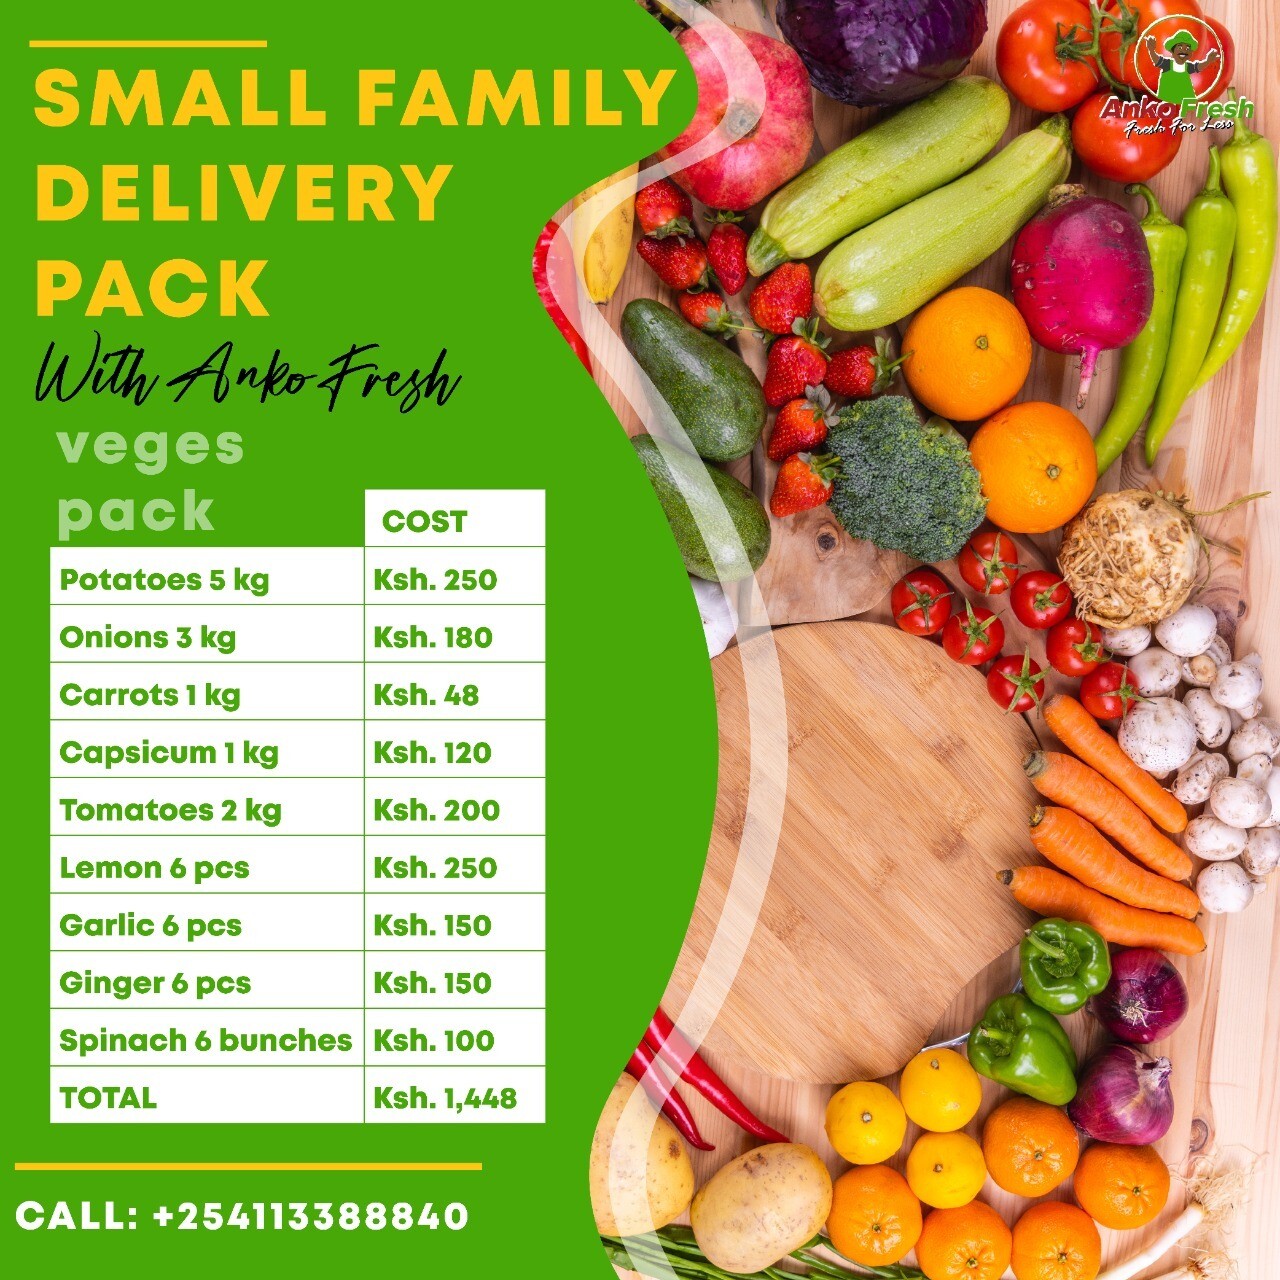 Small family vegetables pack serves family of 6 for 1 week